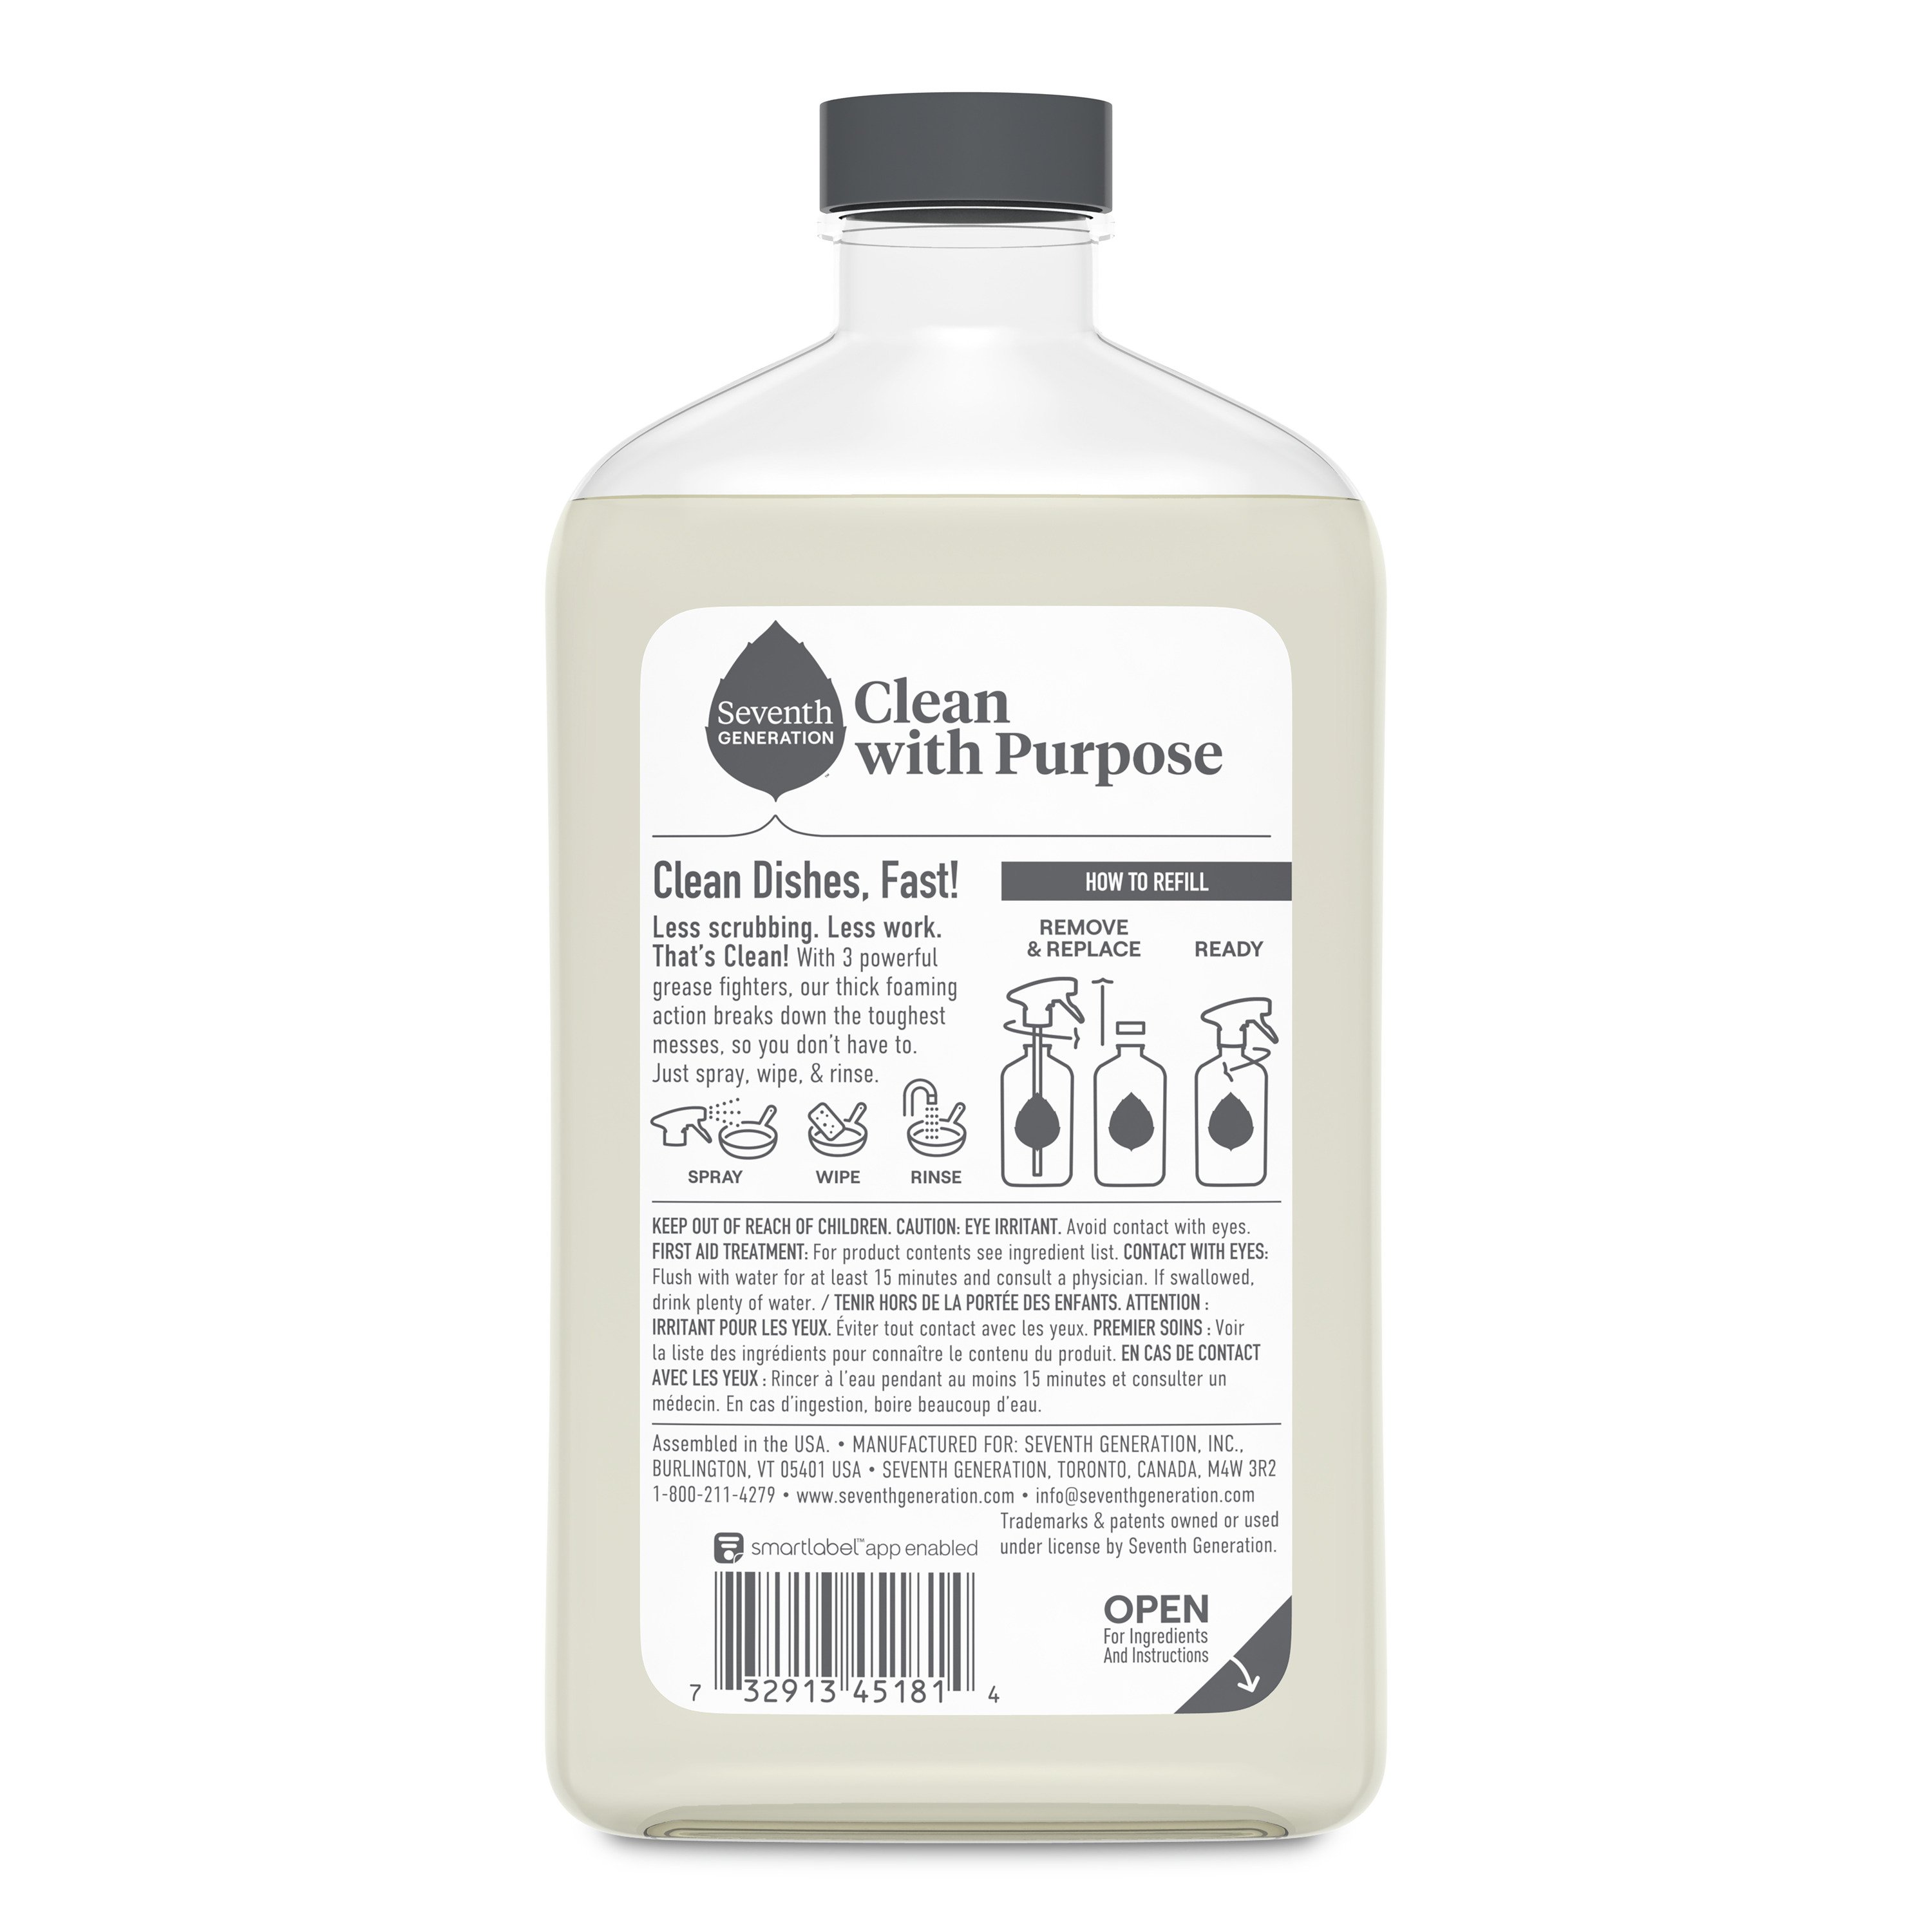 Dawn Platinum Powerwash Lemon Scent Dish Spray - Shop Dish Soap & Detergent  at H-E-B